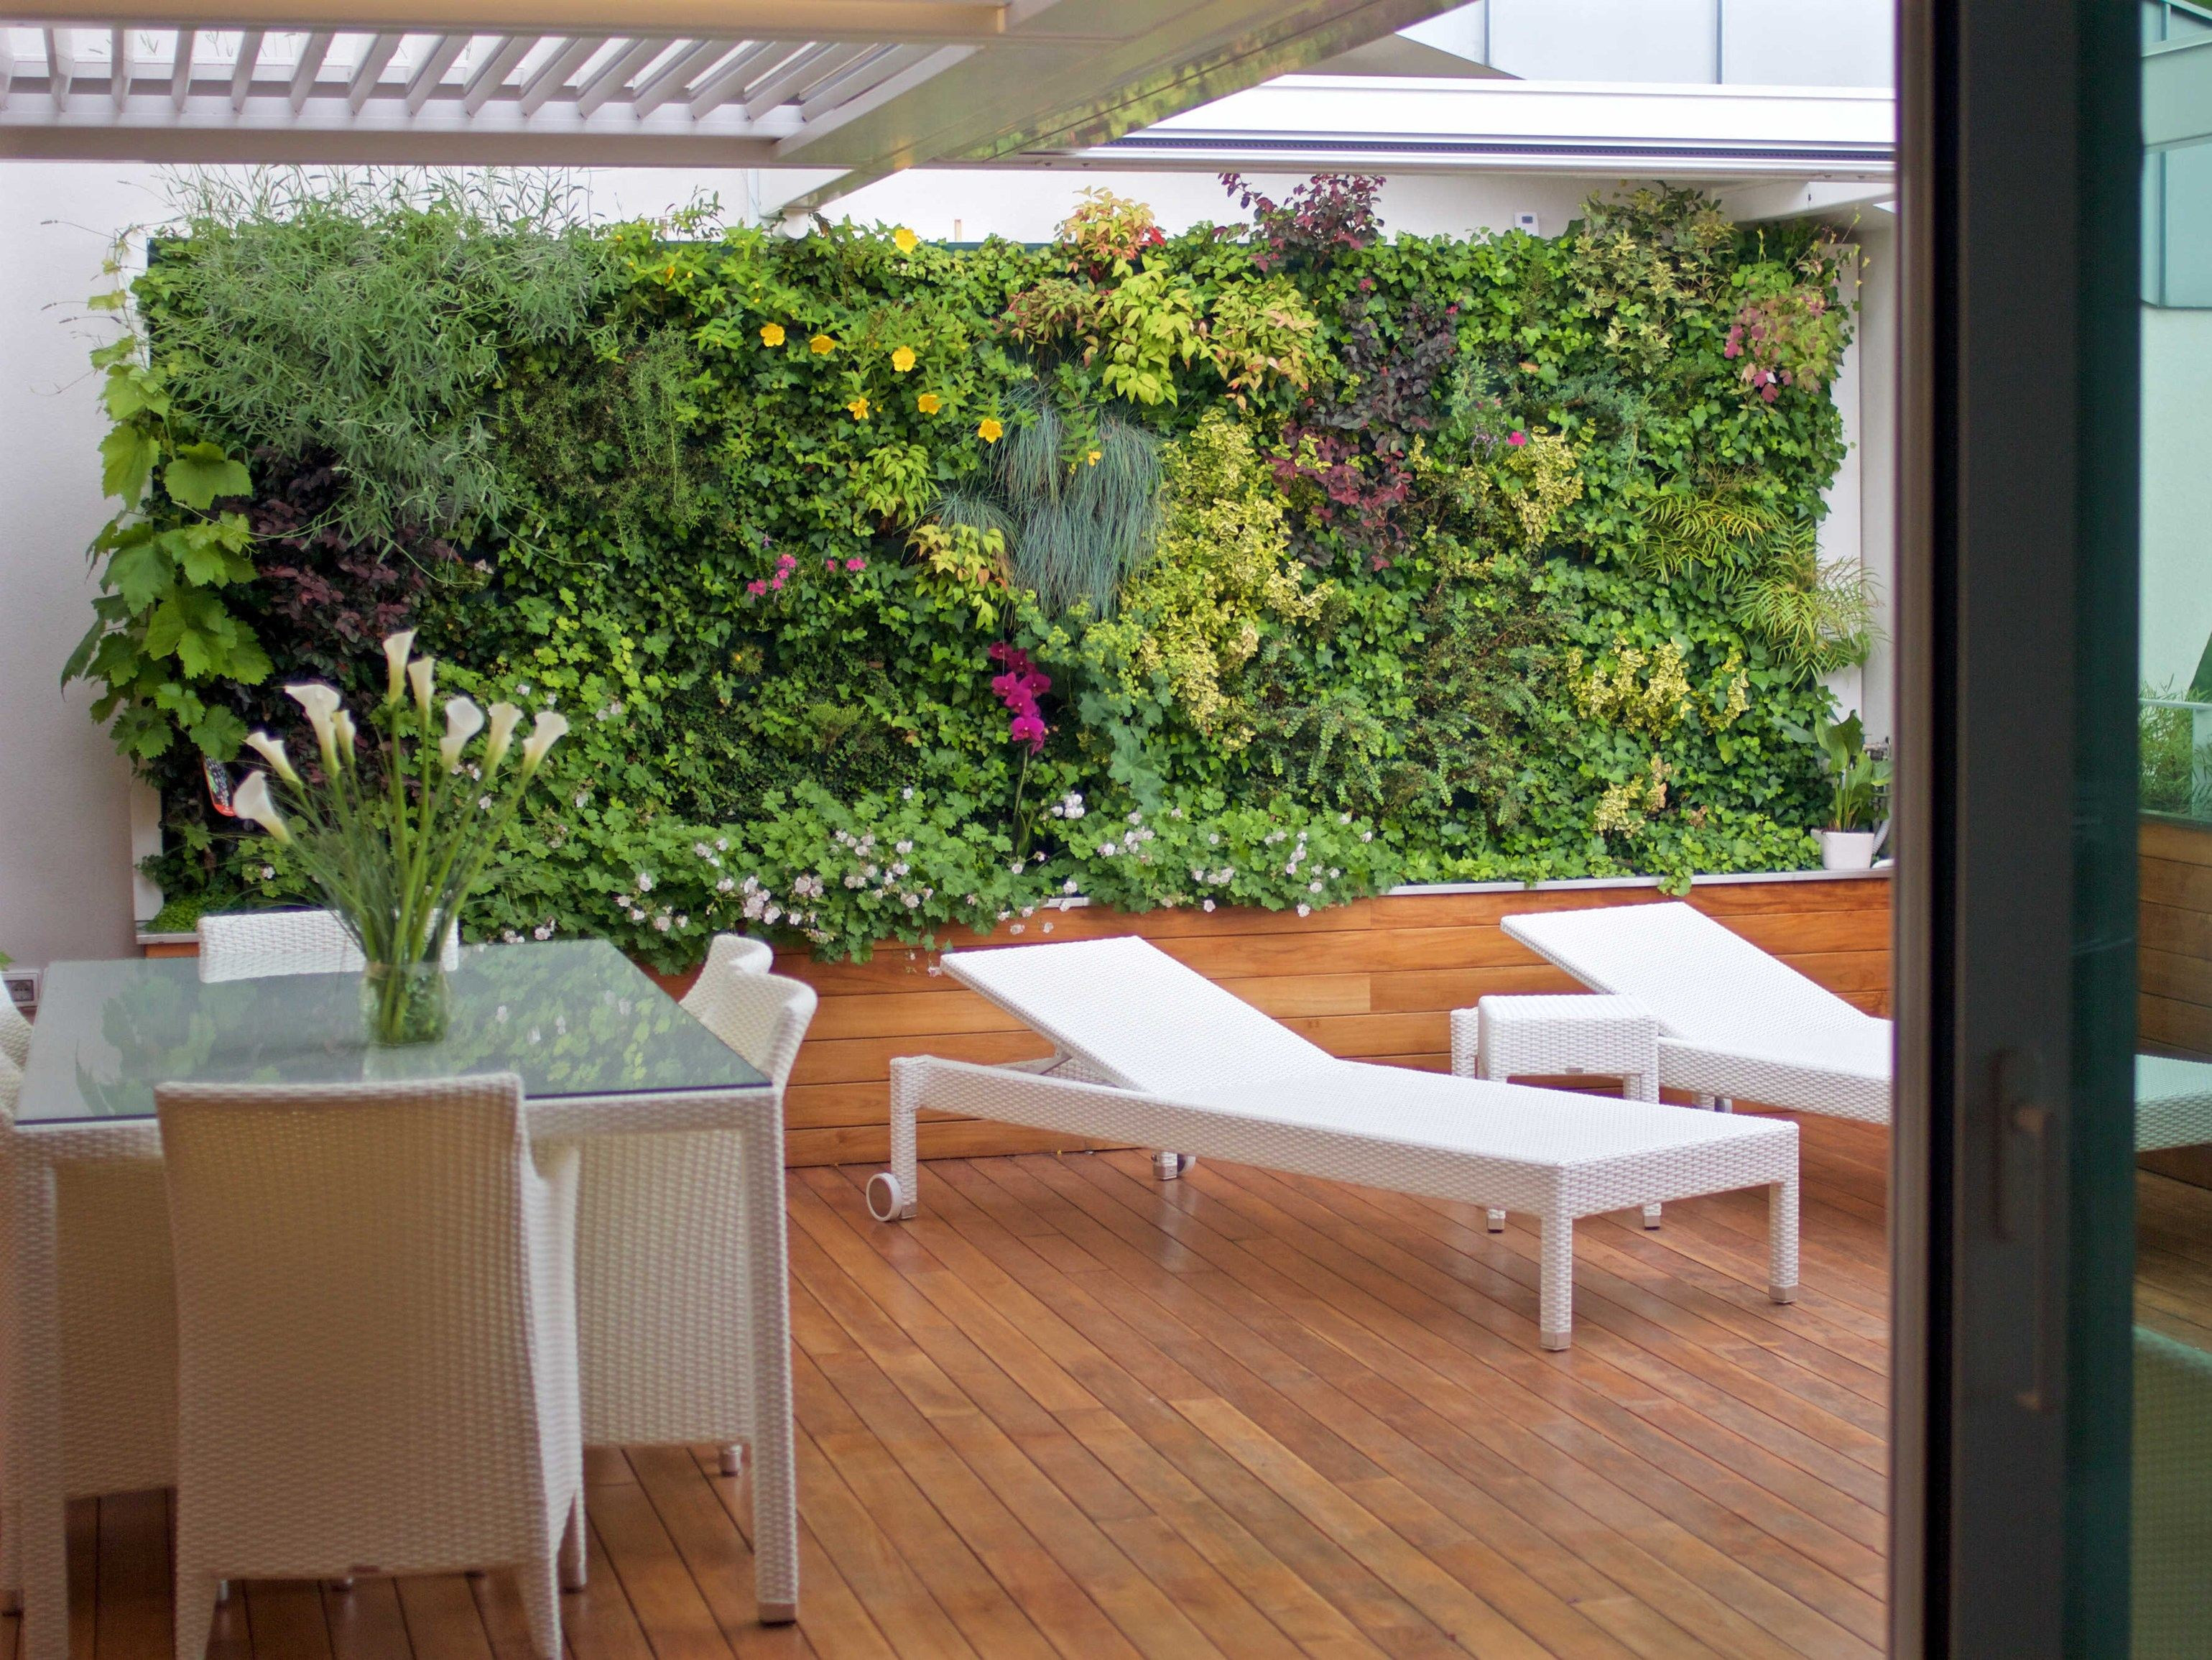 Best ideas about Outdoor Vertical Garden
. Save or Pin Outdoor vertical garden by SUNDAR ITALIA Now.